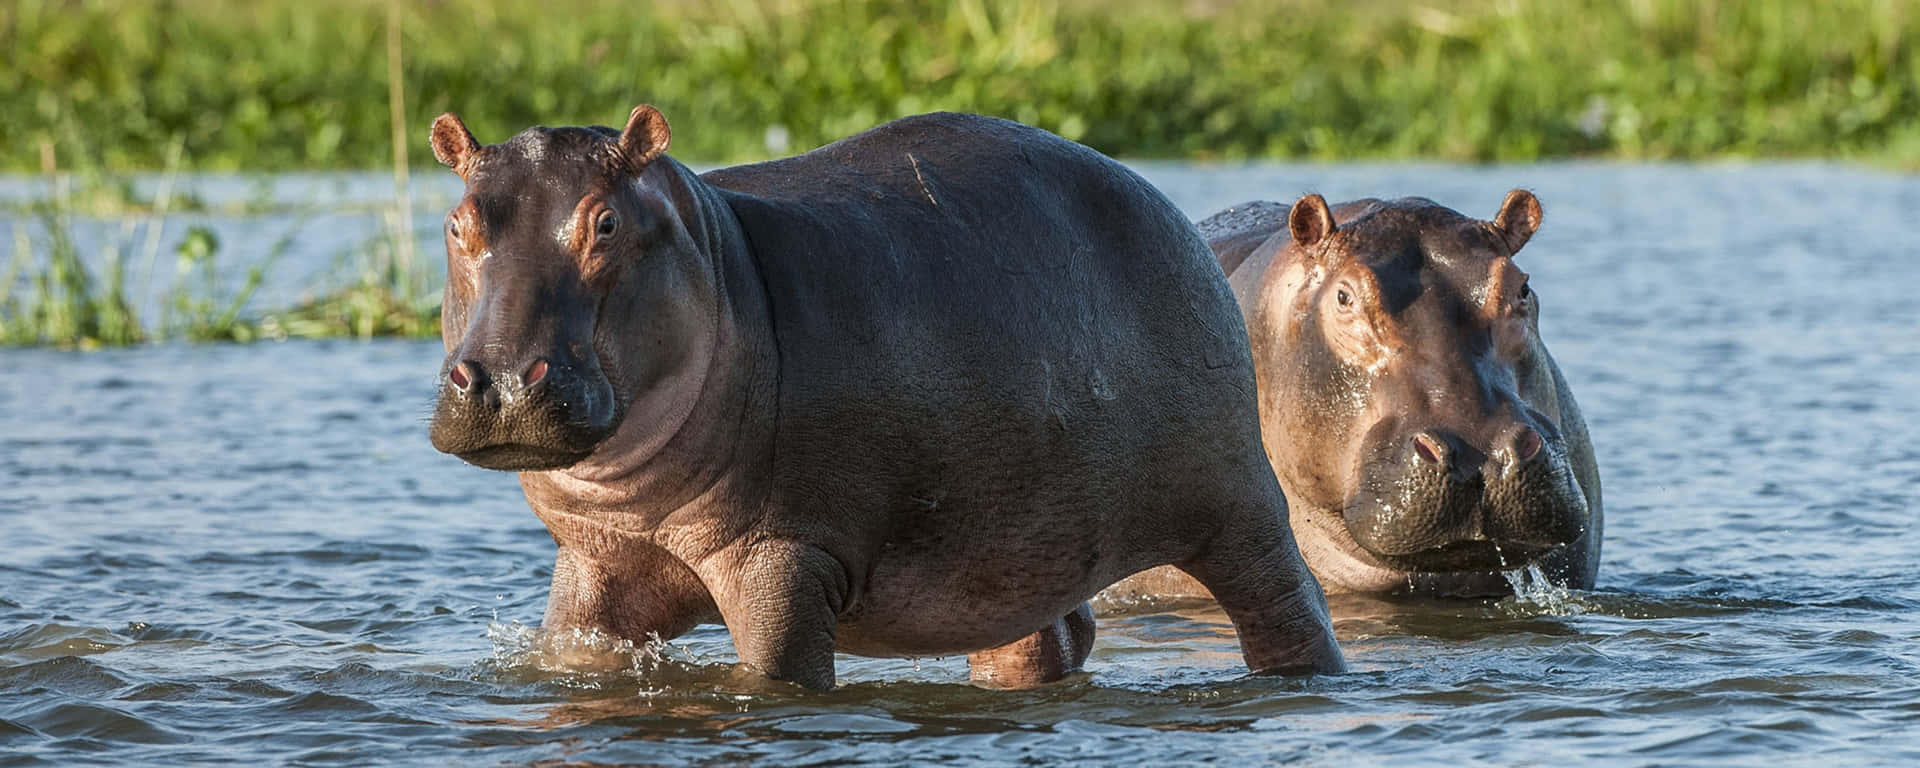 Unprimer Plano De Un Hipopótamo